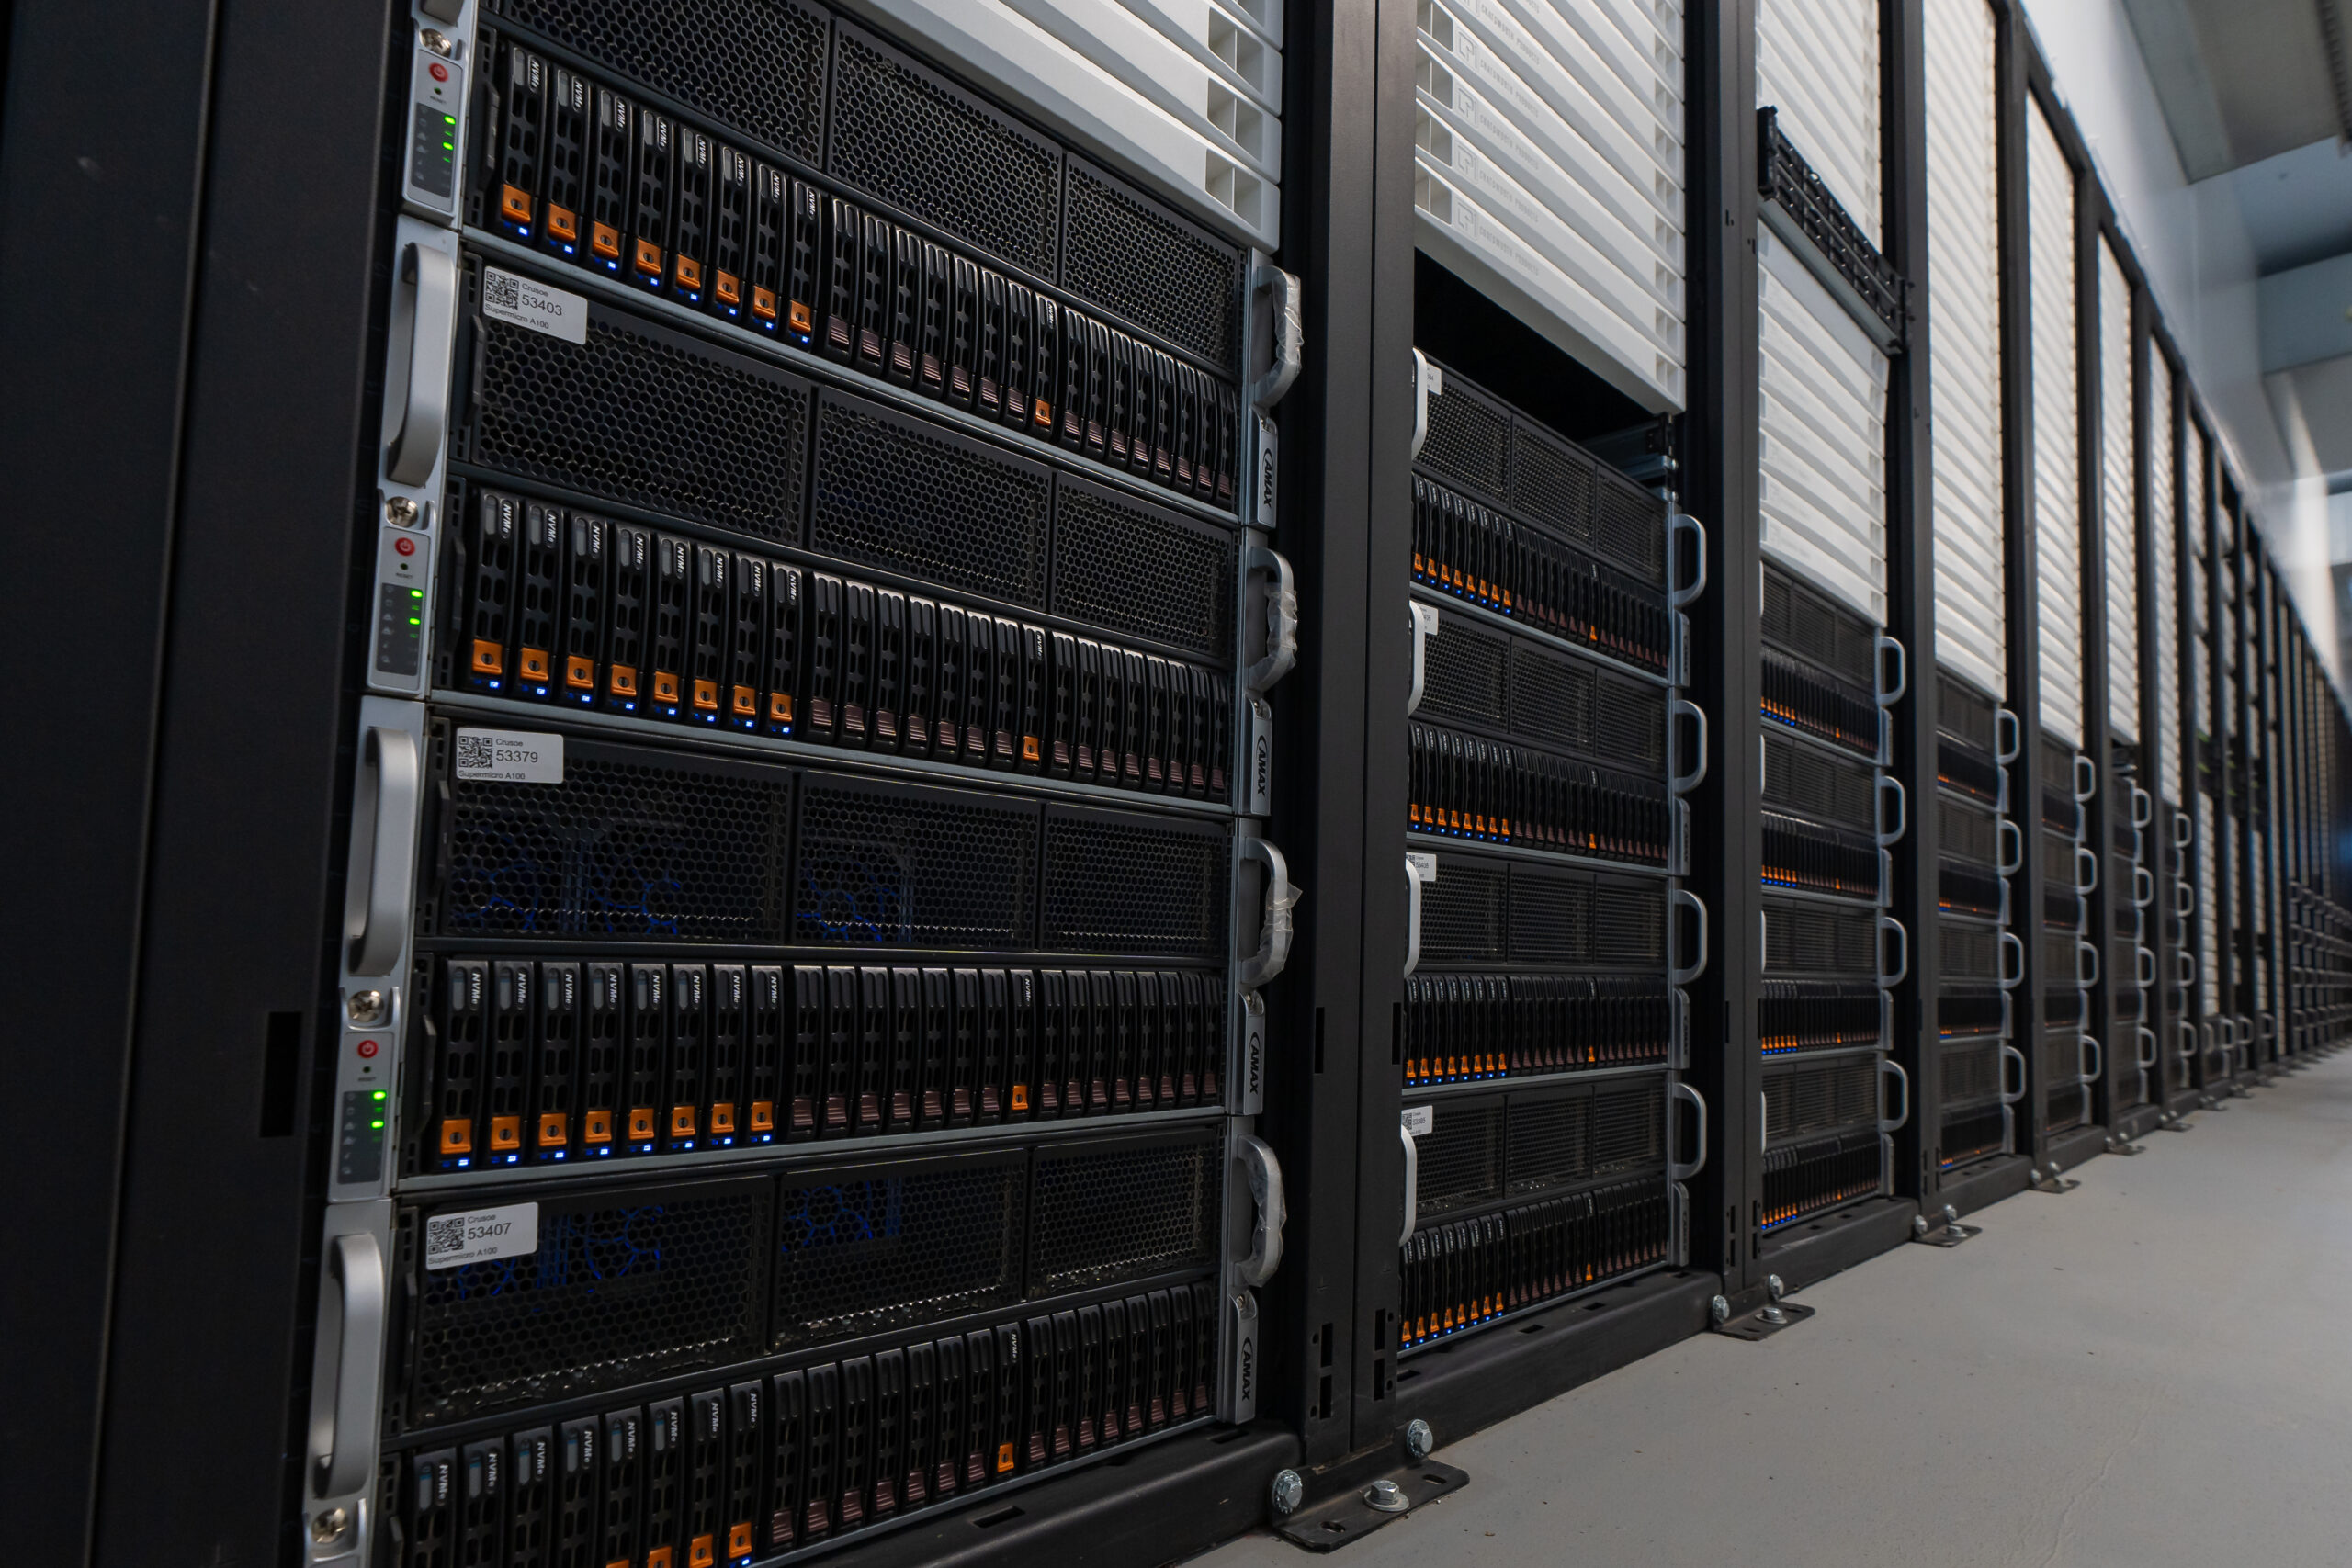 A bank of black computer servers inside a data center.